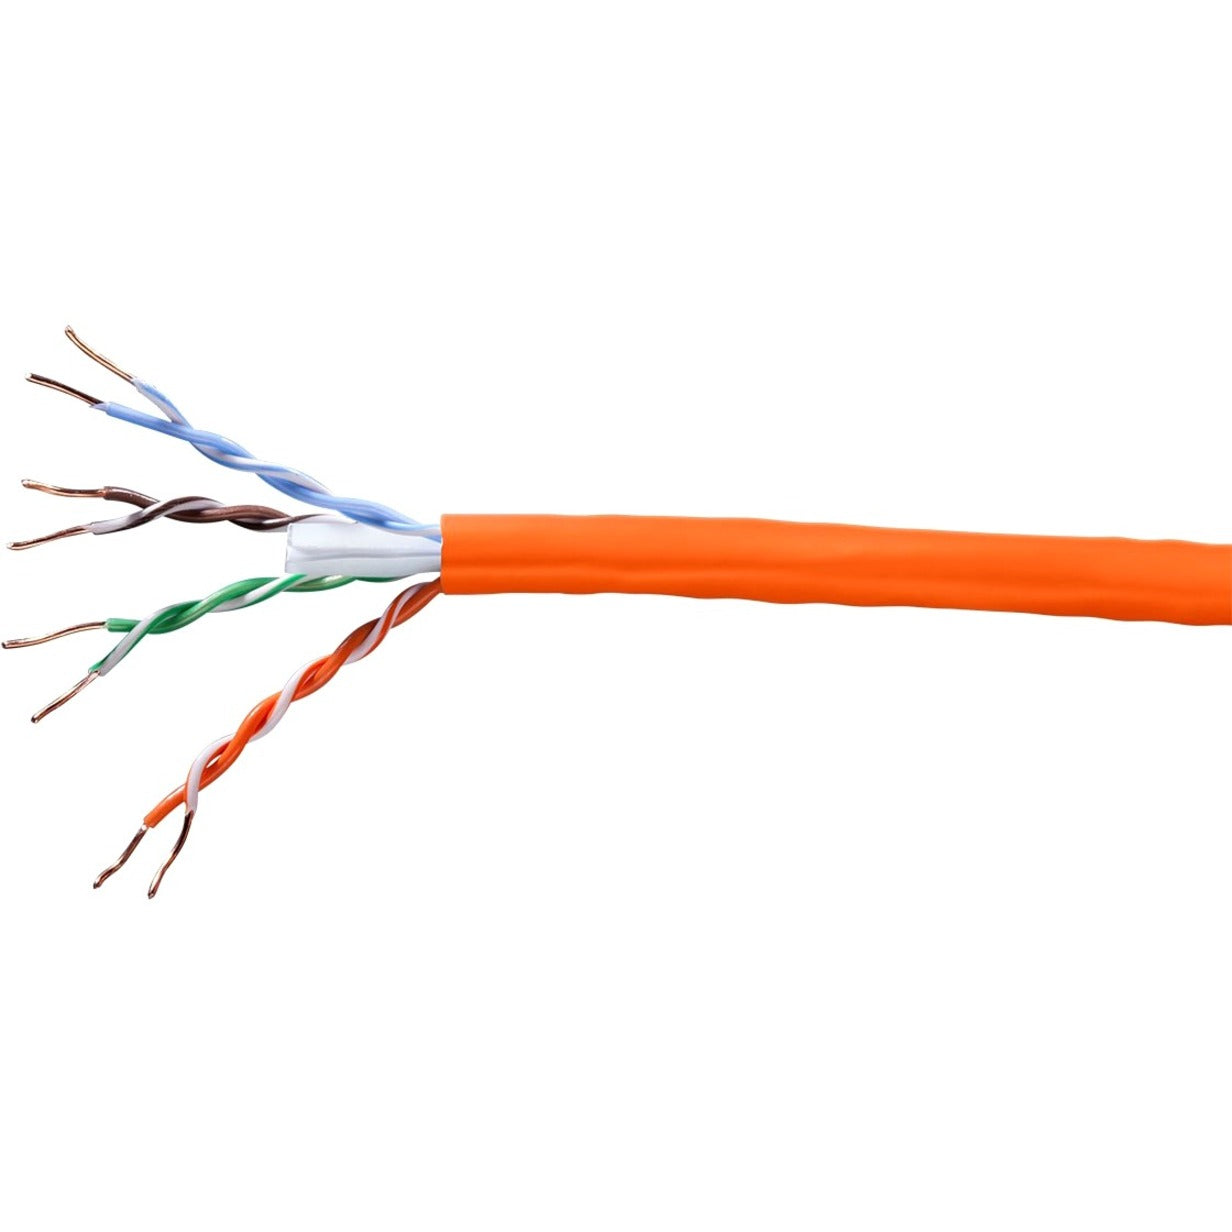 Monoprice 13741 Cat. 5e UTP Network Cable, 1000 ft, Orange